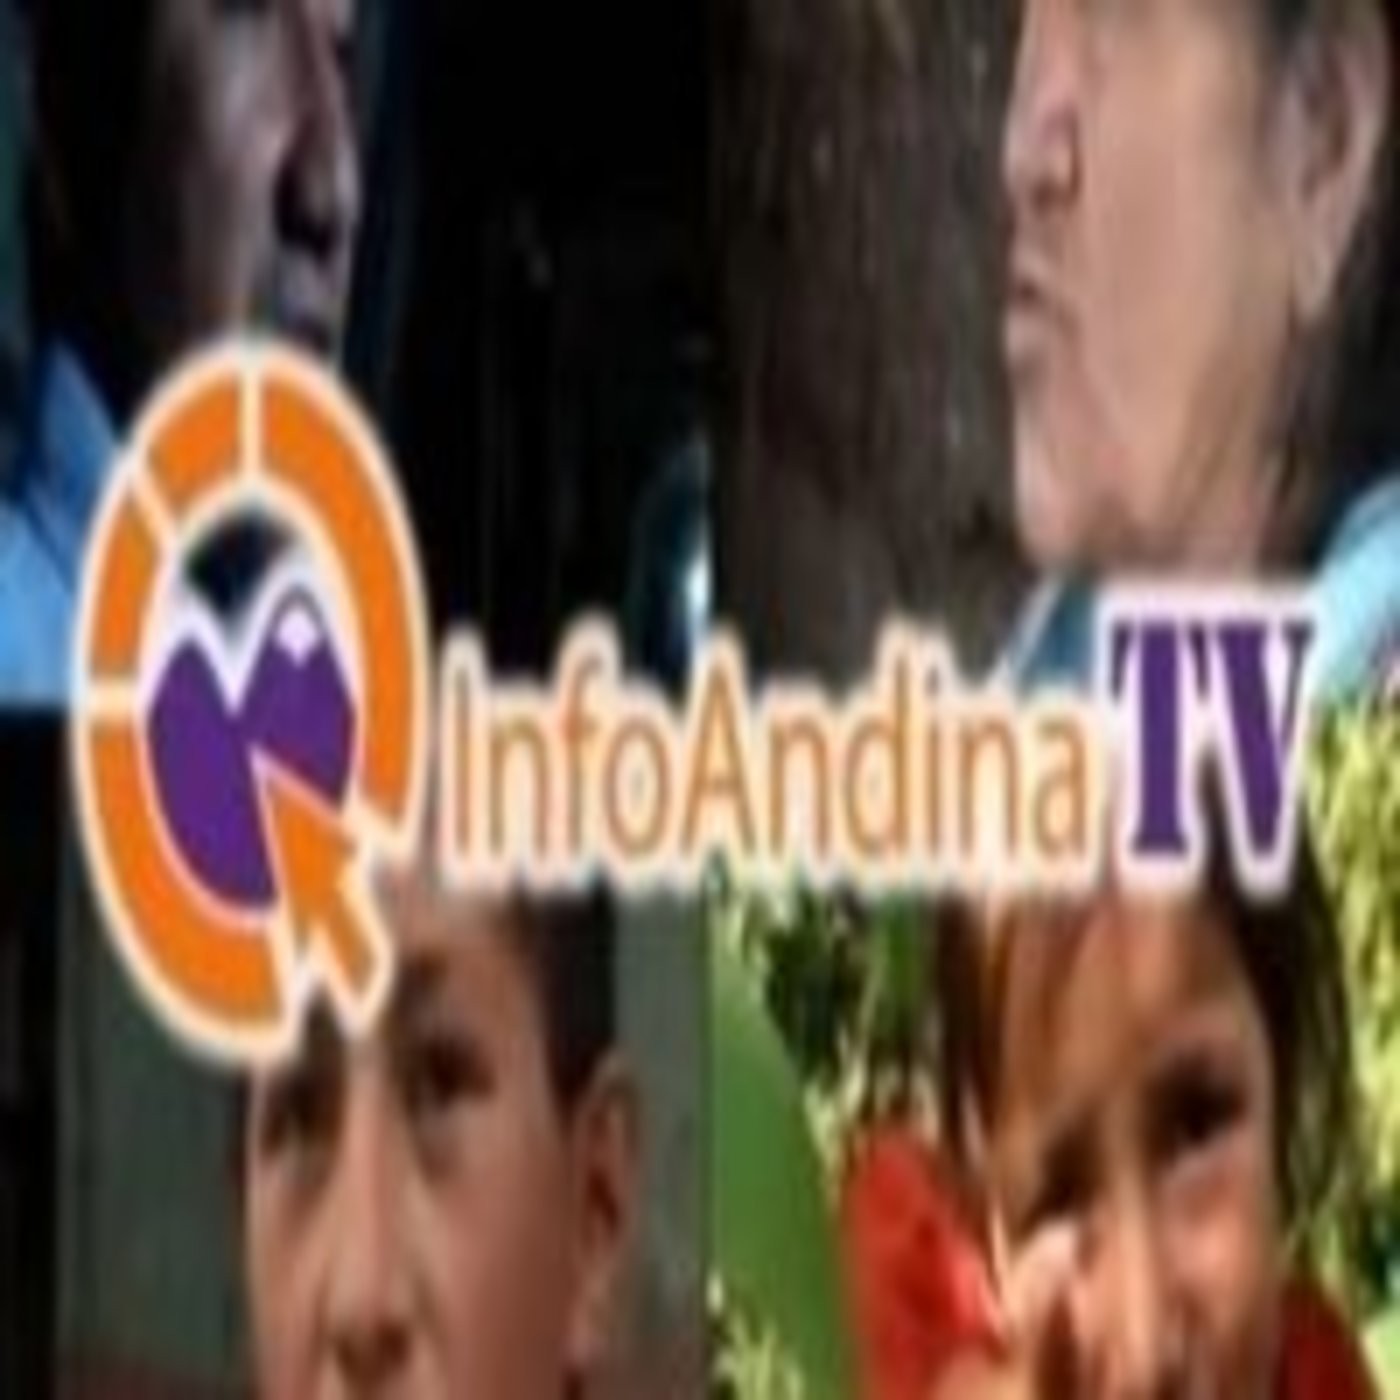 Podcast InfoAndina TV